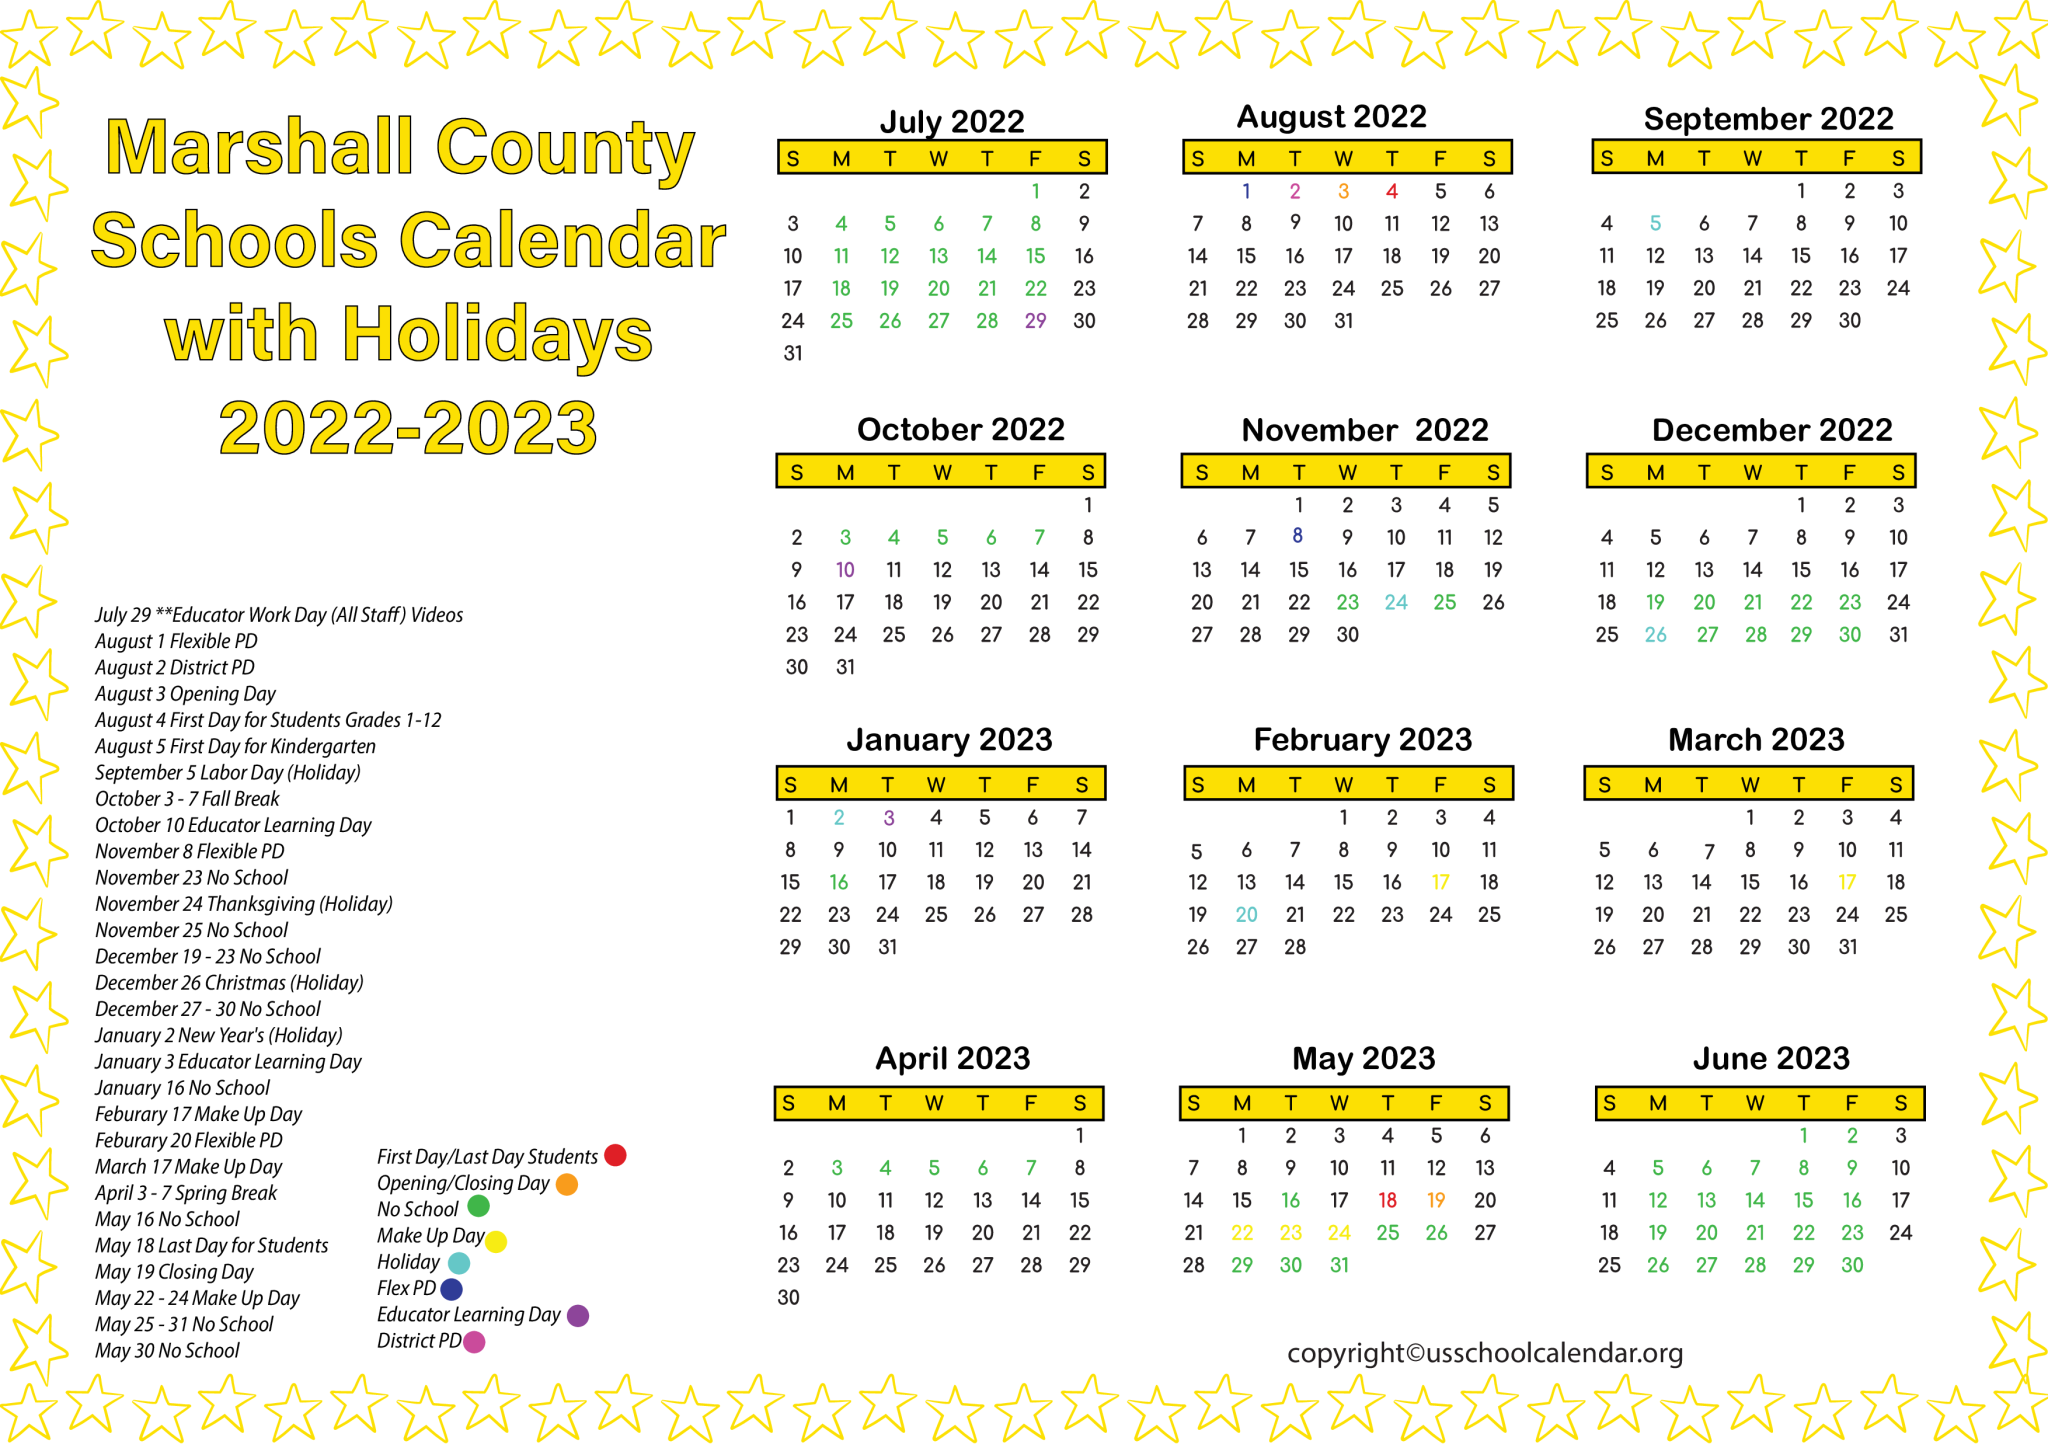 Marshall County Schools Calendar with Holidays 2023